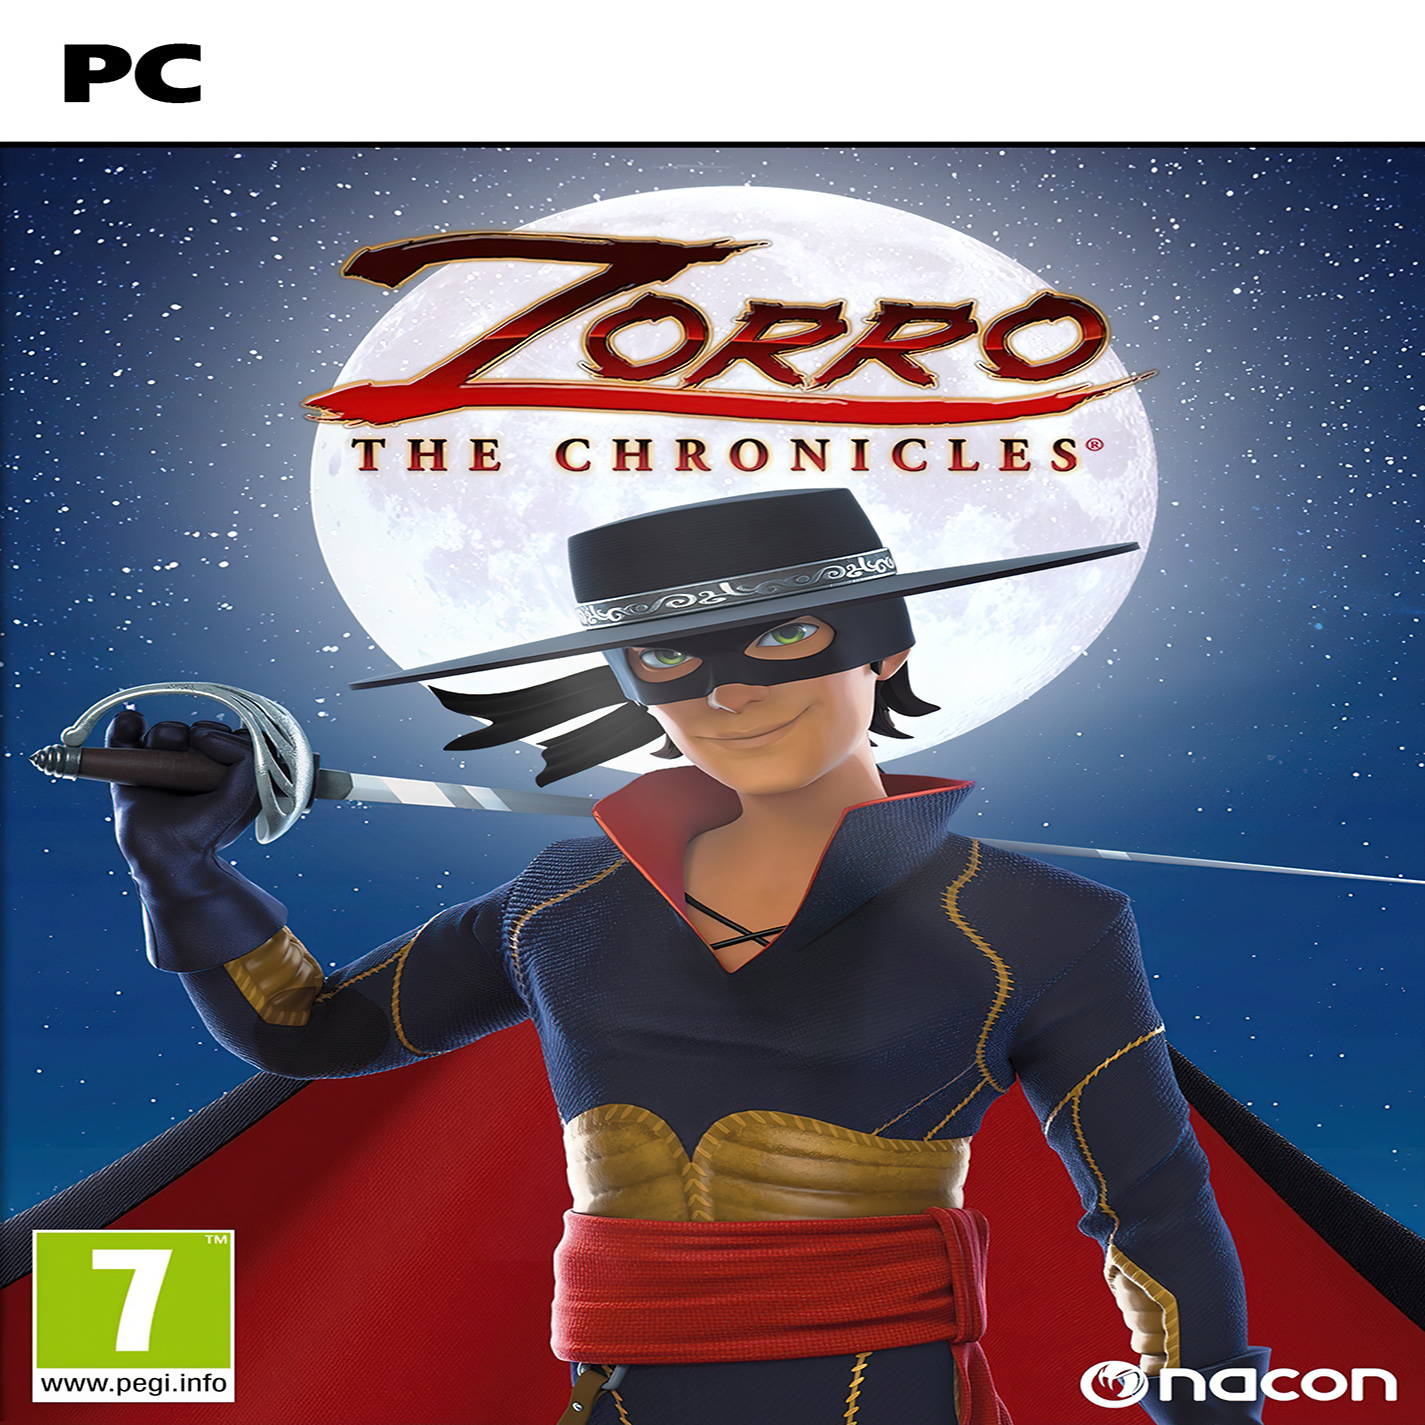 Zorro: The Chronicles - pedn CD obal